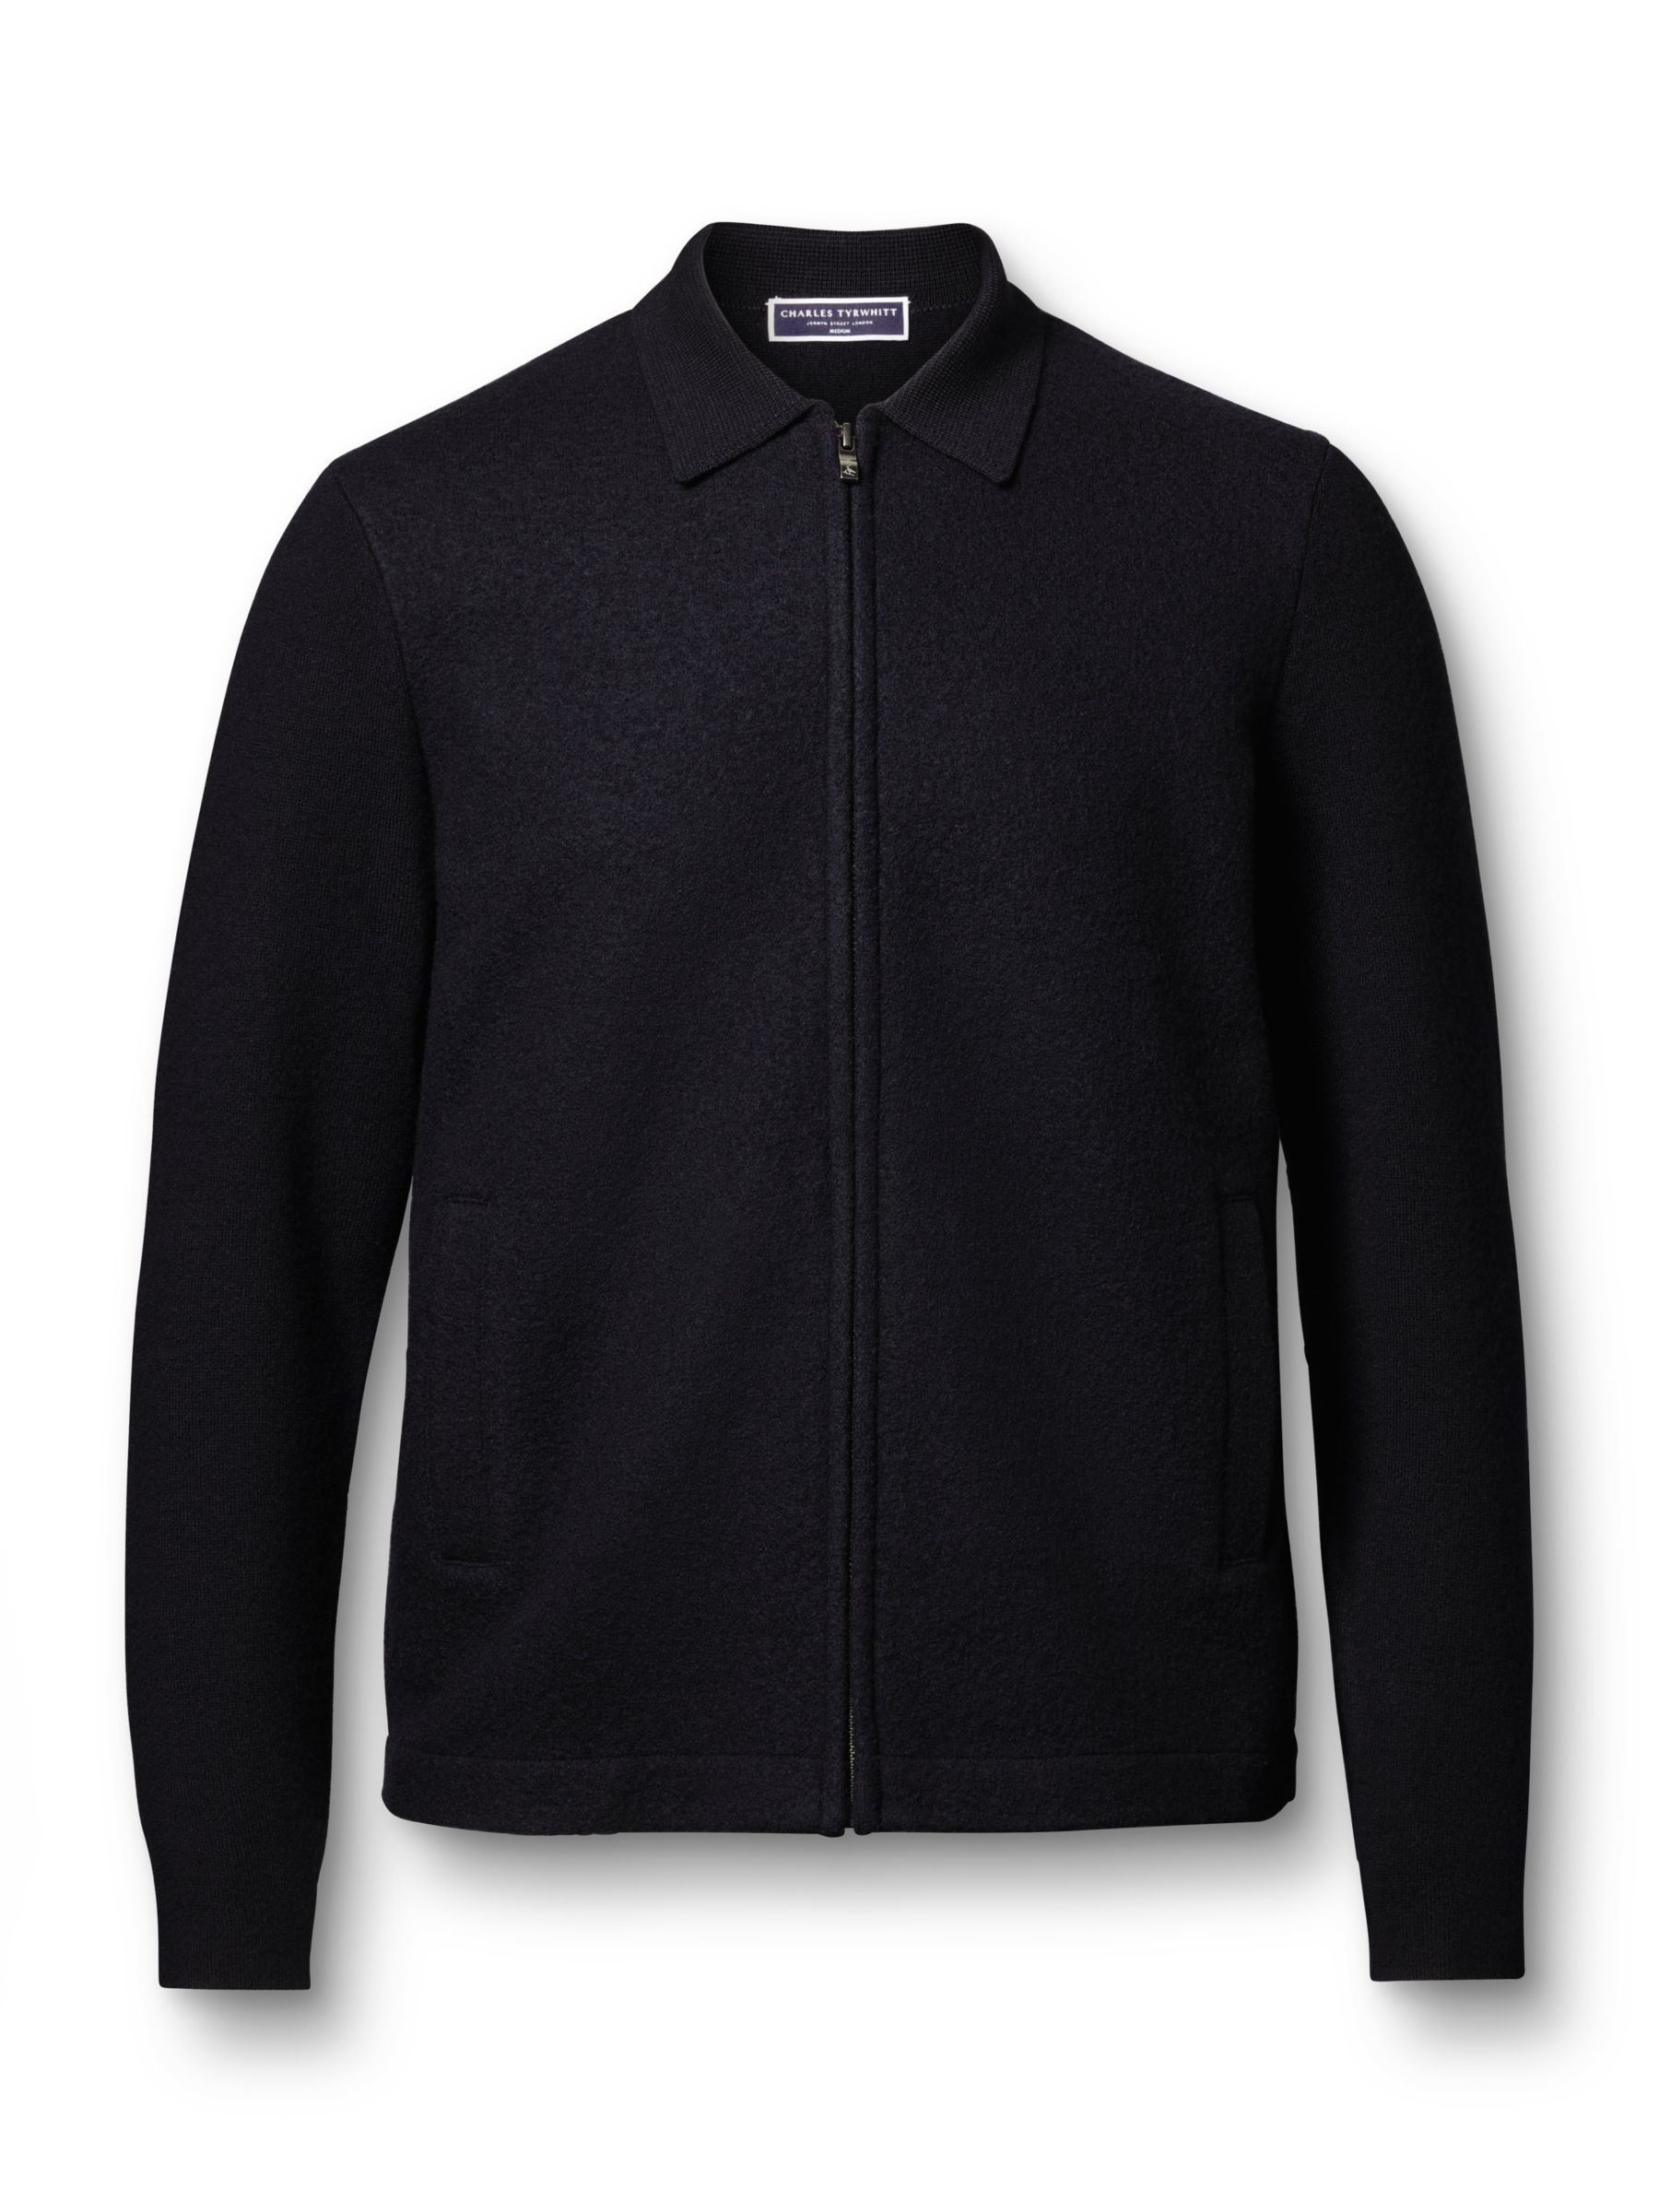 Buy Charles Tyrwhitt Brushed Merino Wool Zip Jacket, Dark Navy Online at johnlewis.com